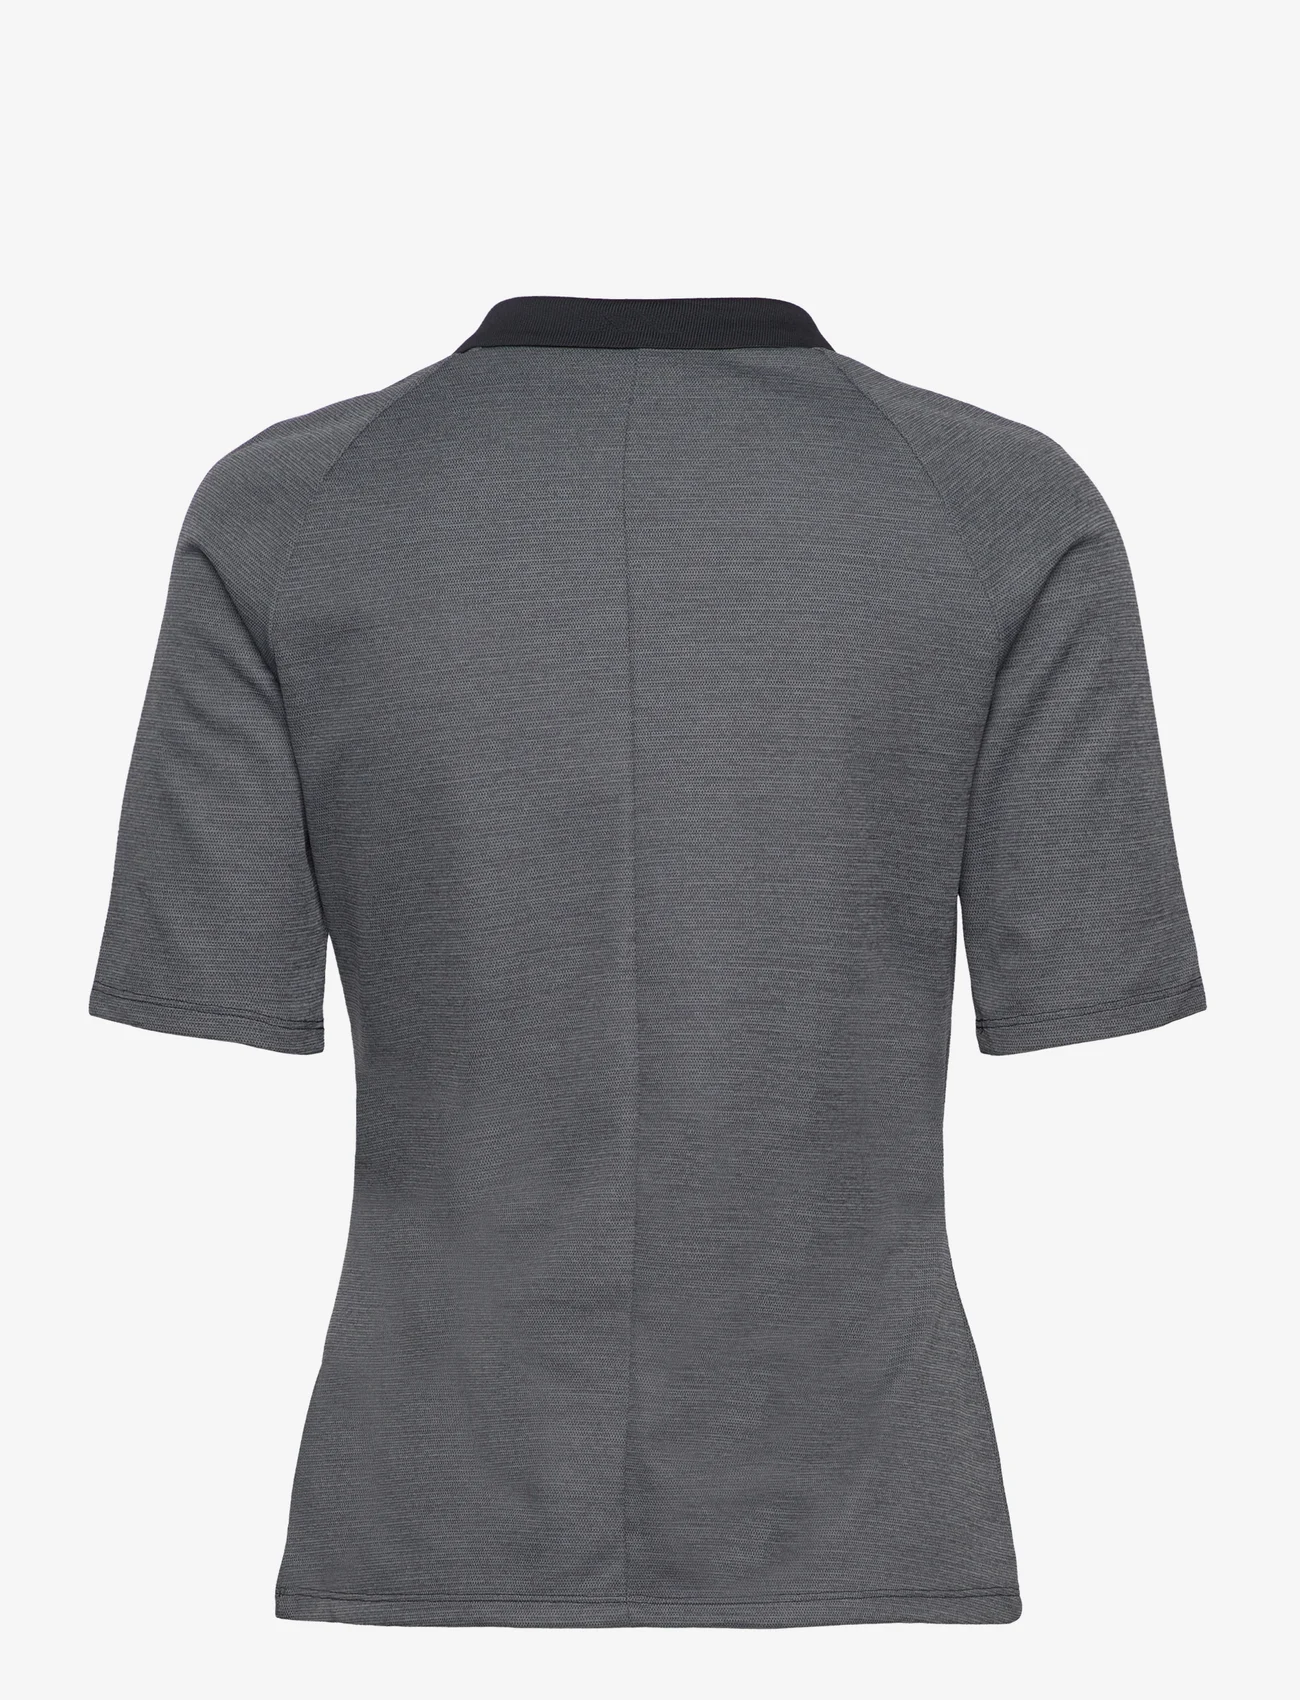 adidas Golf - W NO SHOW SS P - t-shirts & tops - black - 1